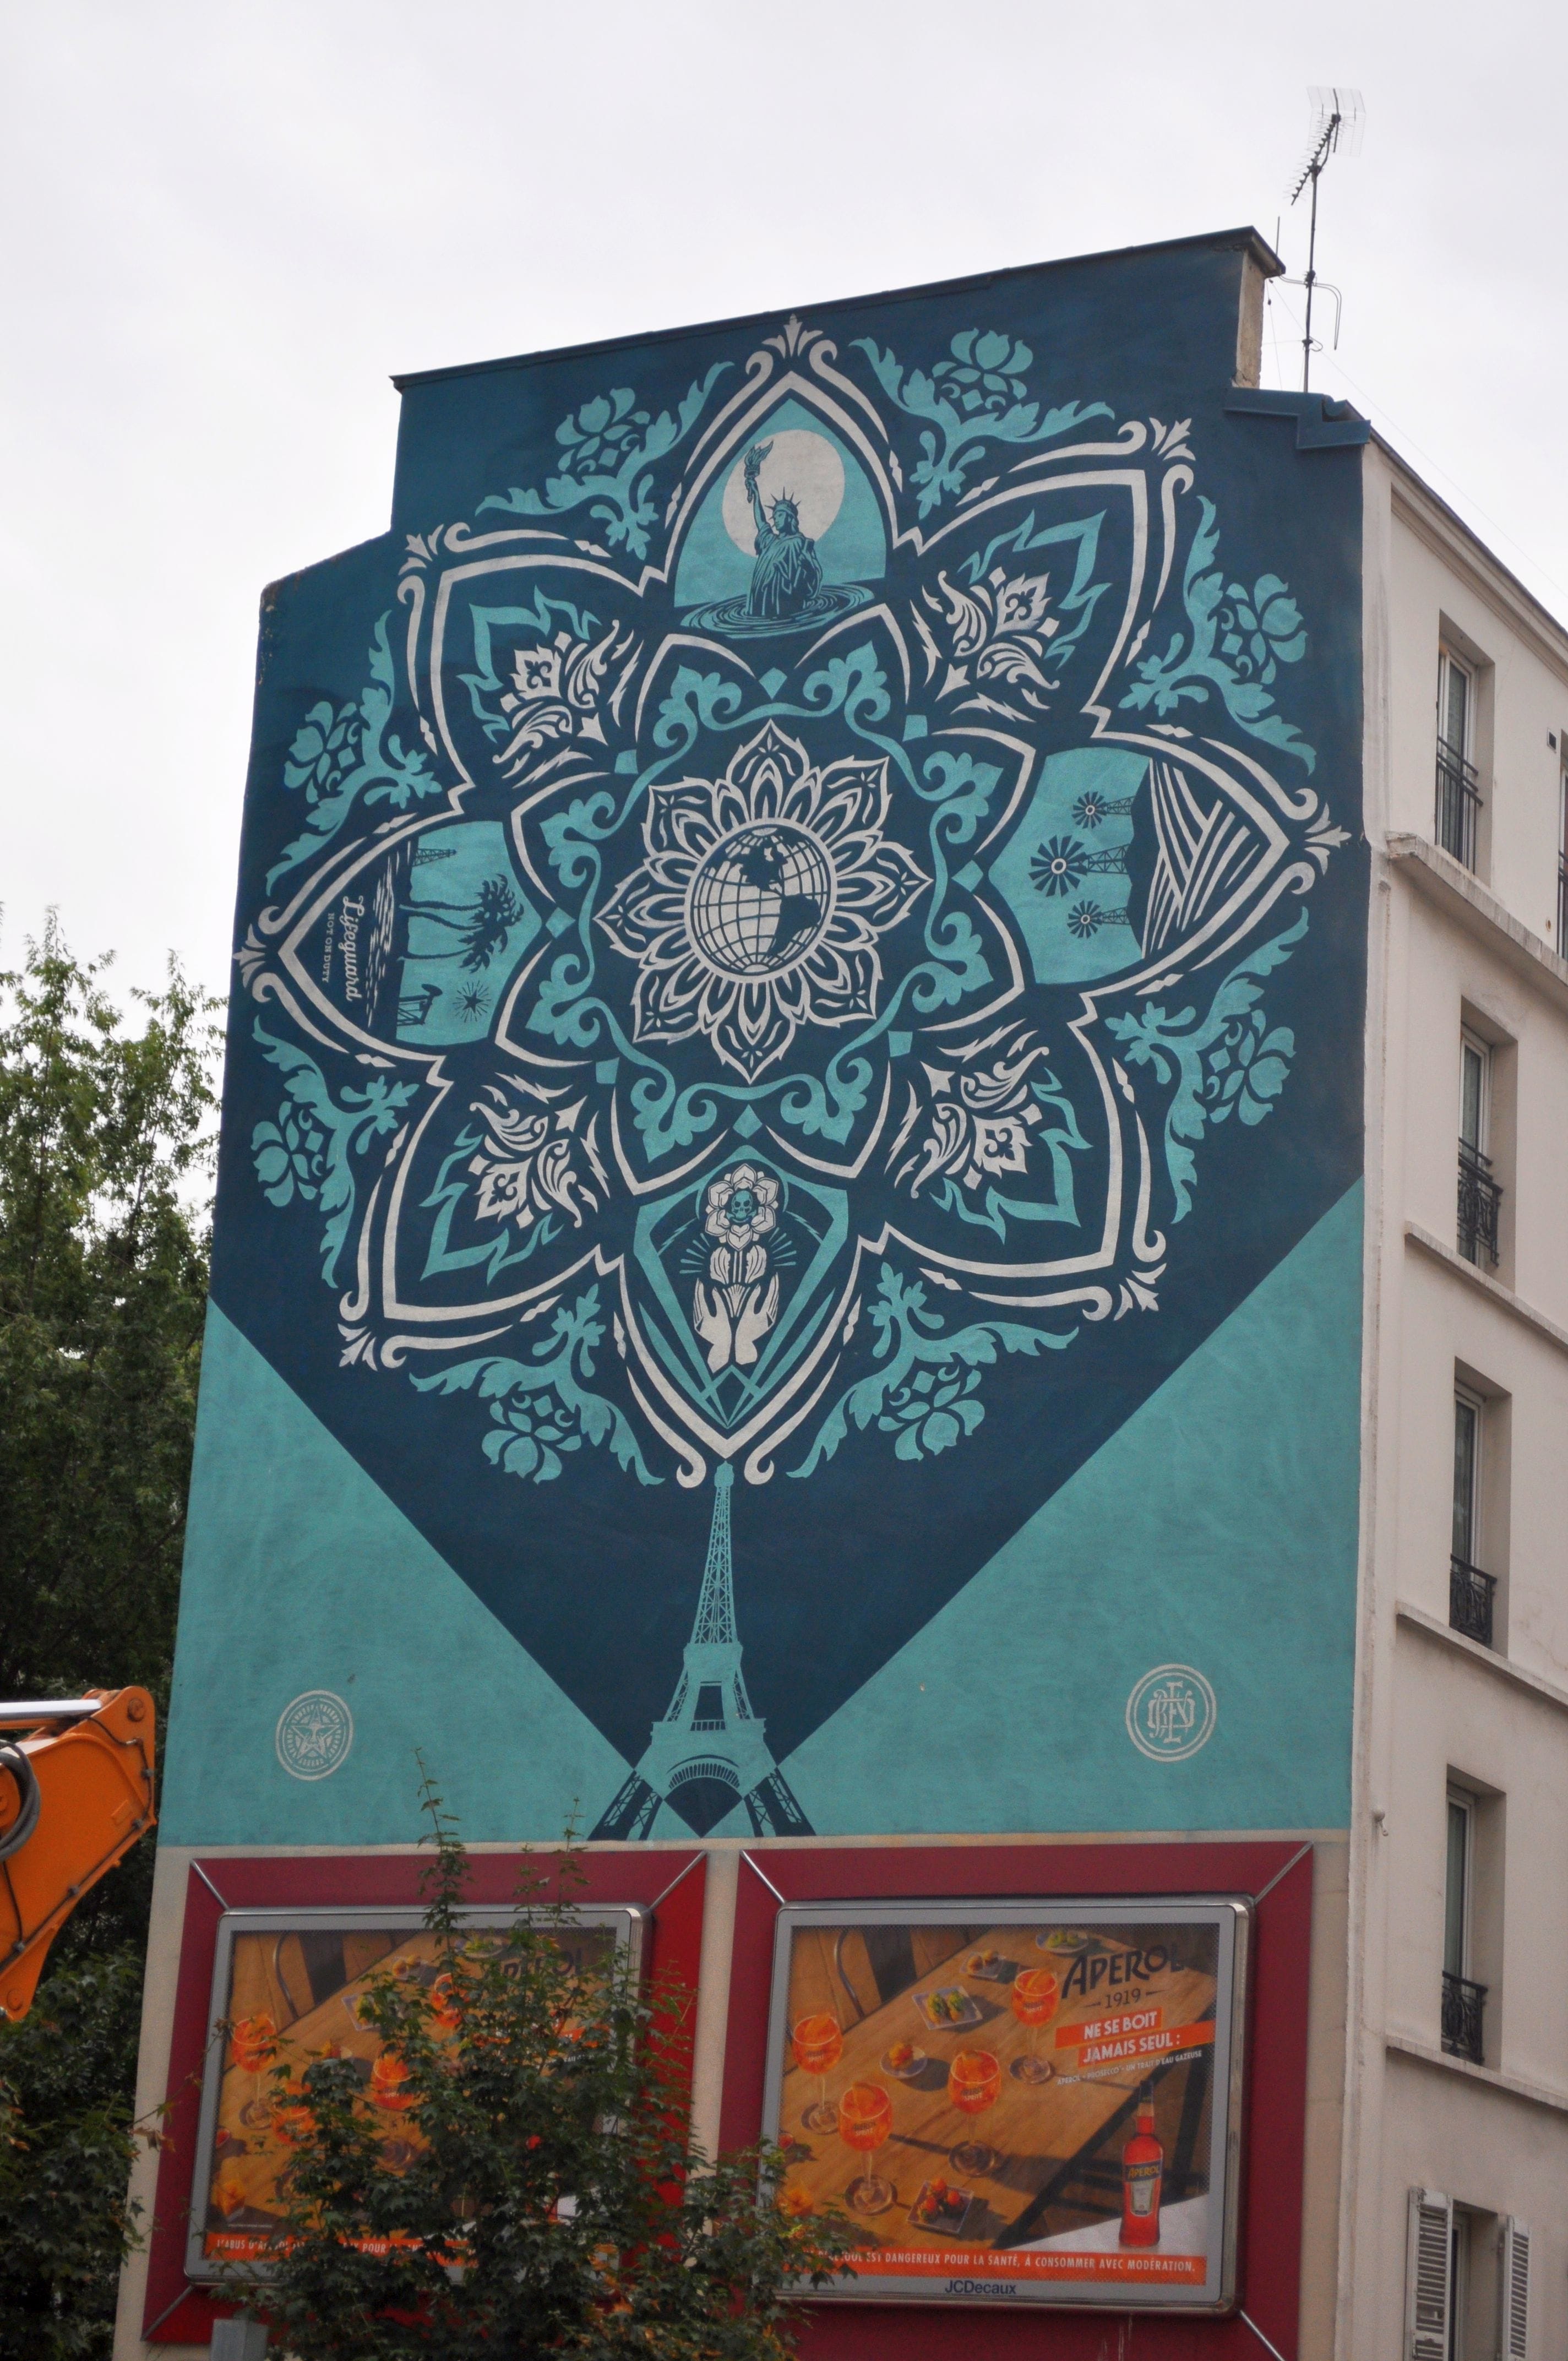 Graffiti 4722  by the artist Obey (Shepard Fairey) captured by elettrotajik in Paris France